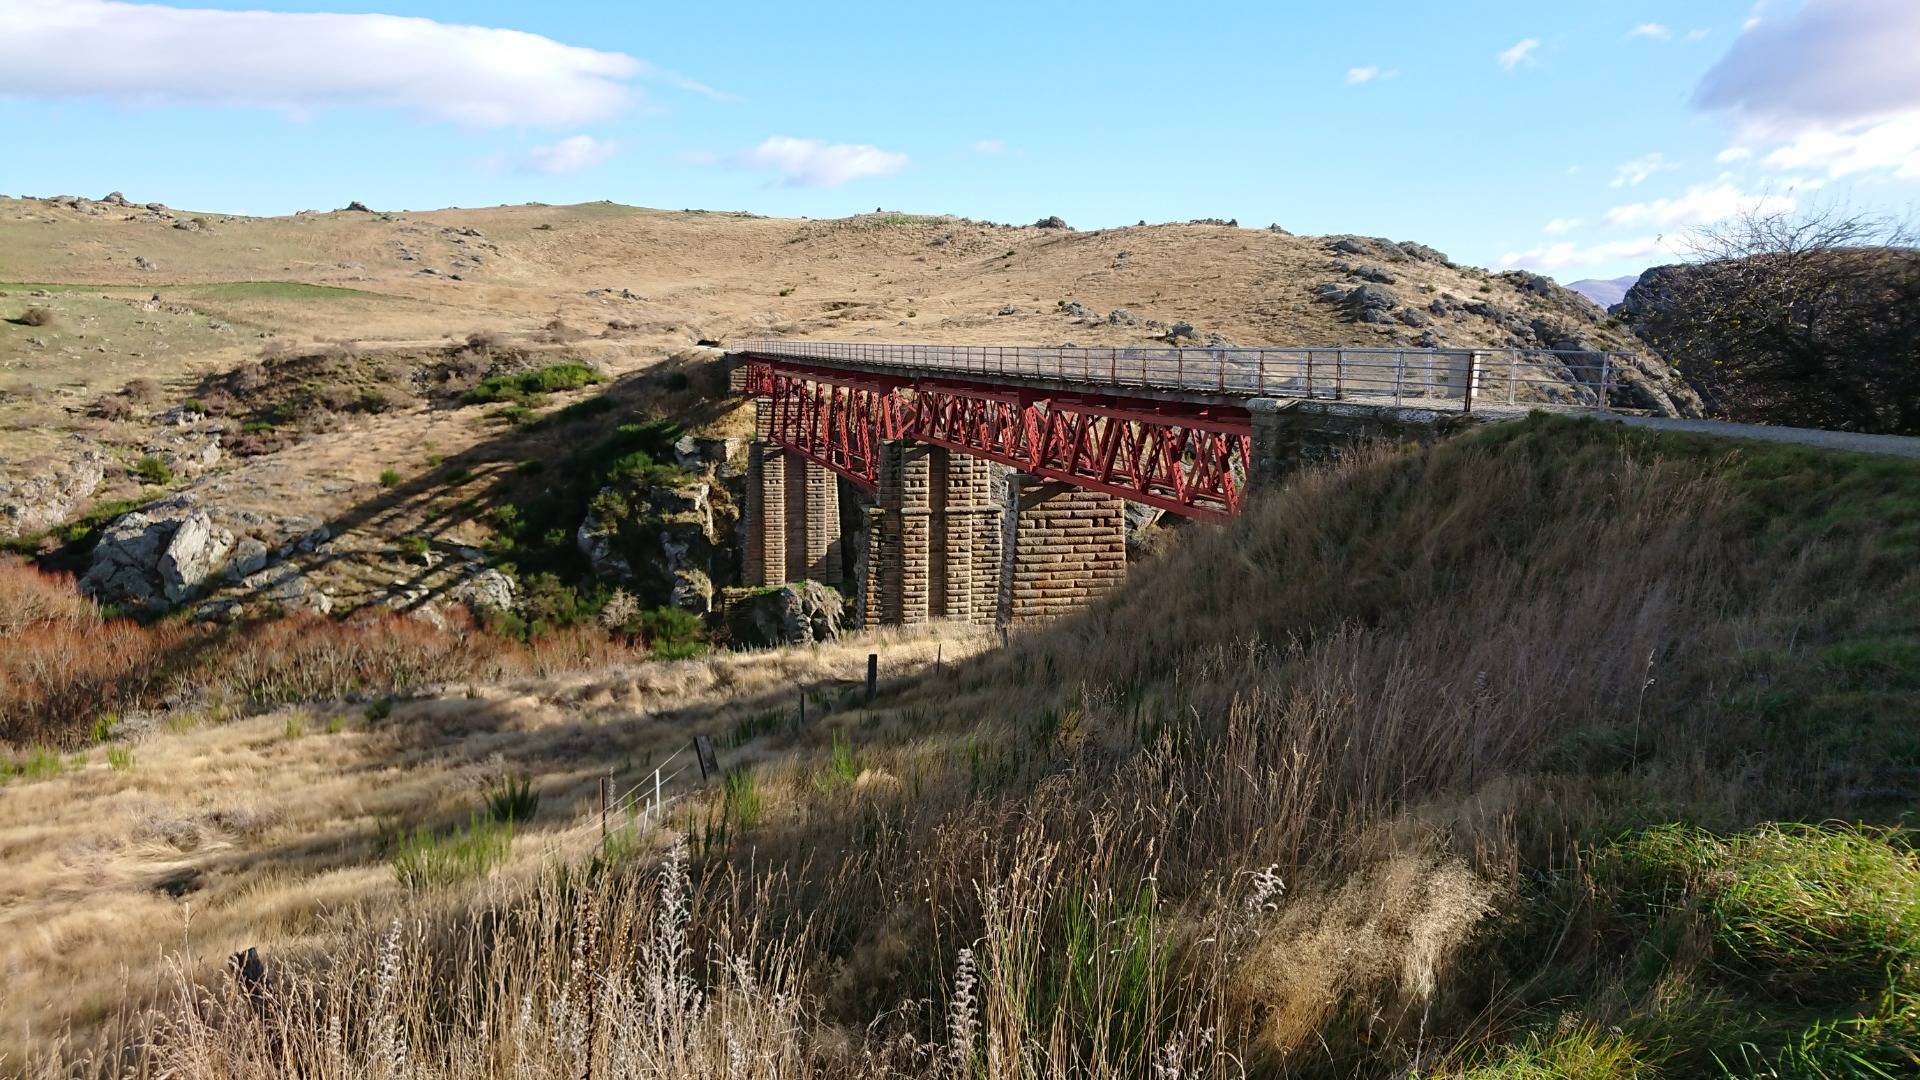 The Poolburn Viaduct